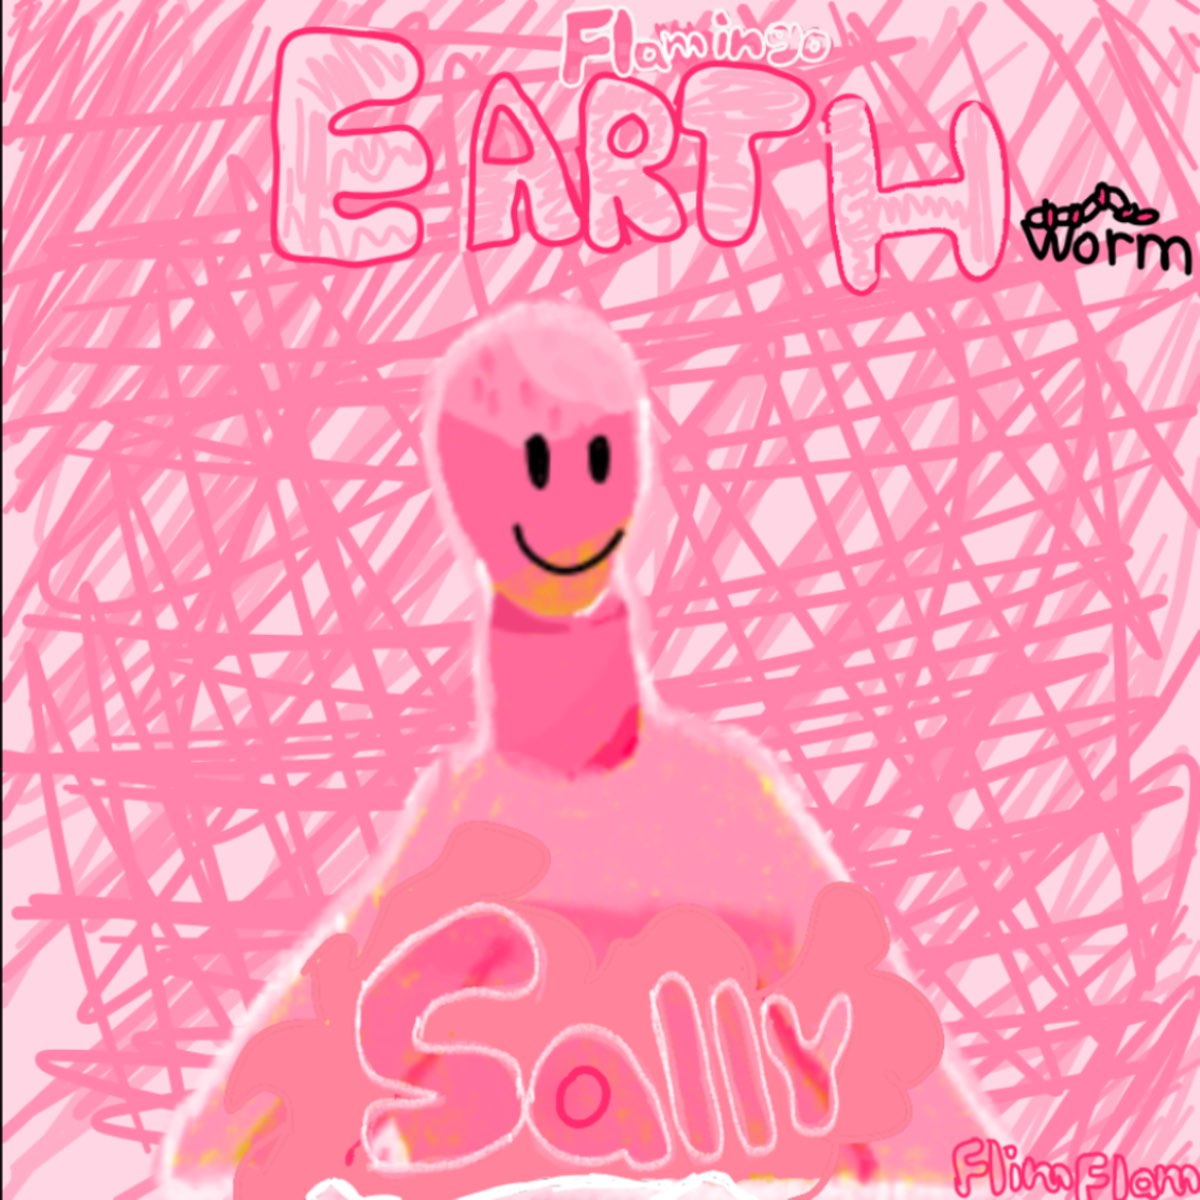 Earth worm sally lyrics